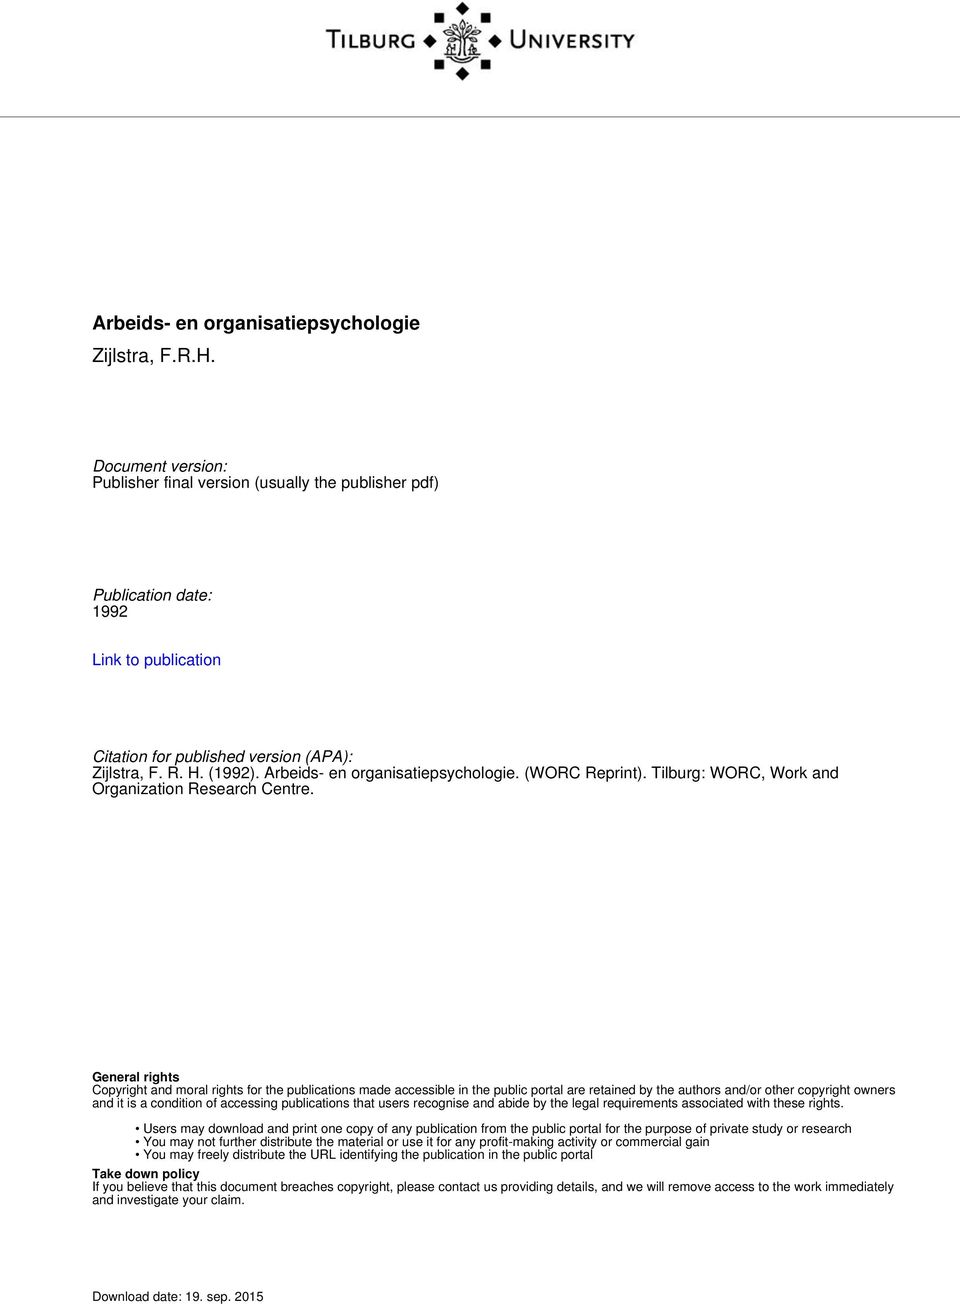 Arbeids- en organisatiepsychologie. (WORC Reprint). Tilburg: WORC, Work and Organization Research Centre.